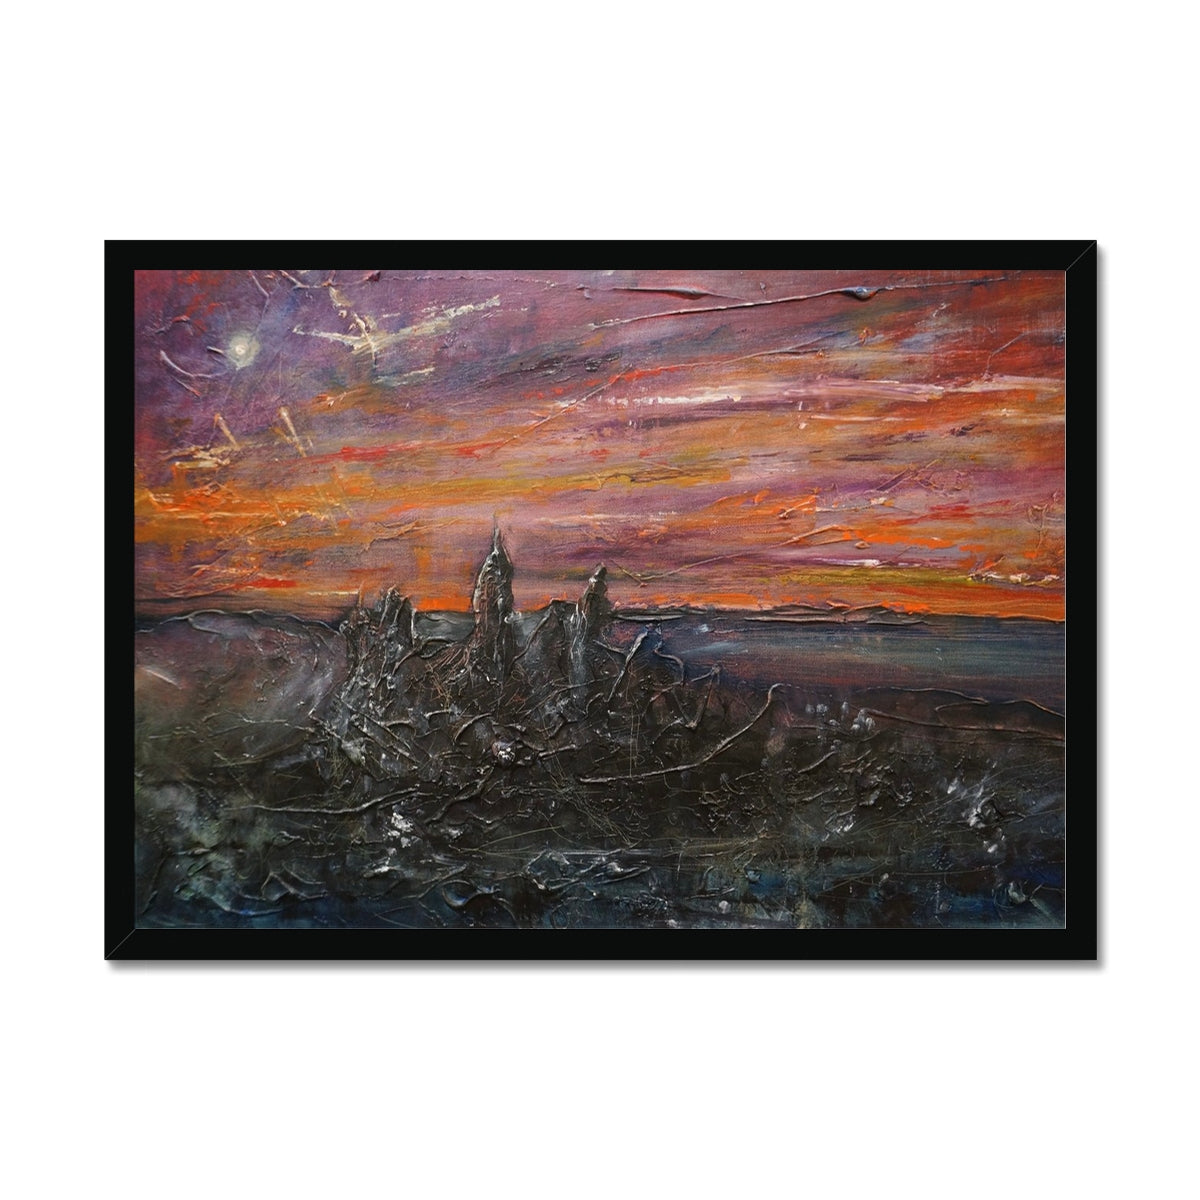 Storr Moonlight Skye Painting | Framed Prints From Scotland-Framed Prints-Skye Art Gallery-A2 Landscape-Black Frame-Paintings, Prints, Homeware, Art Gifts From Scotland By Scottish Artist Kevin Hunter